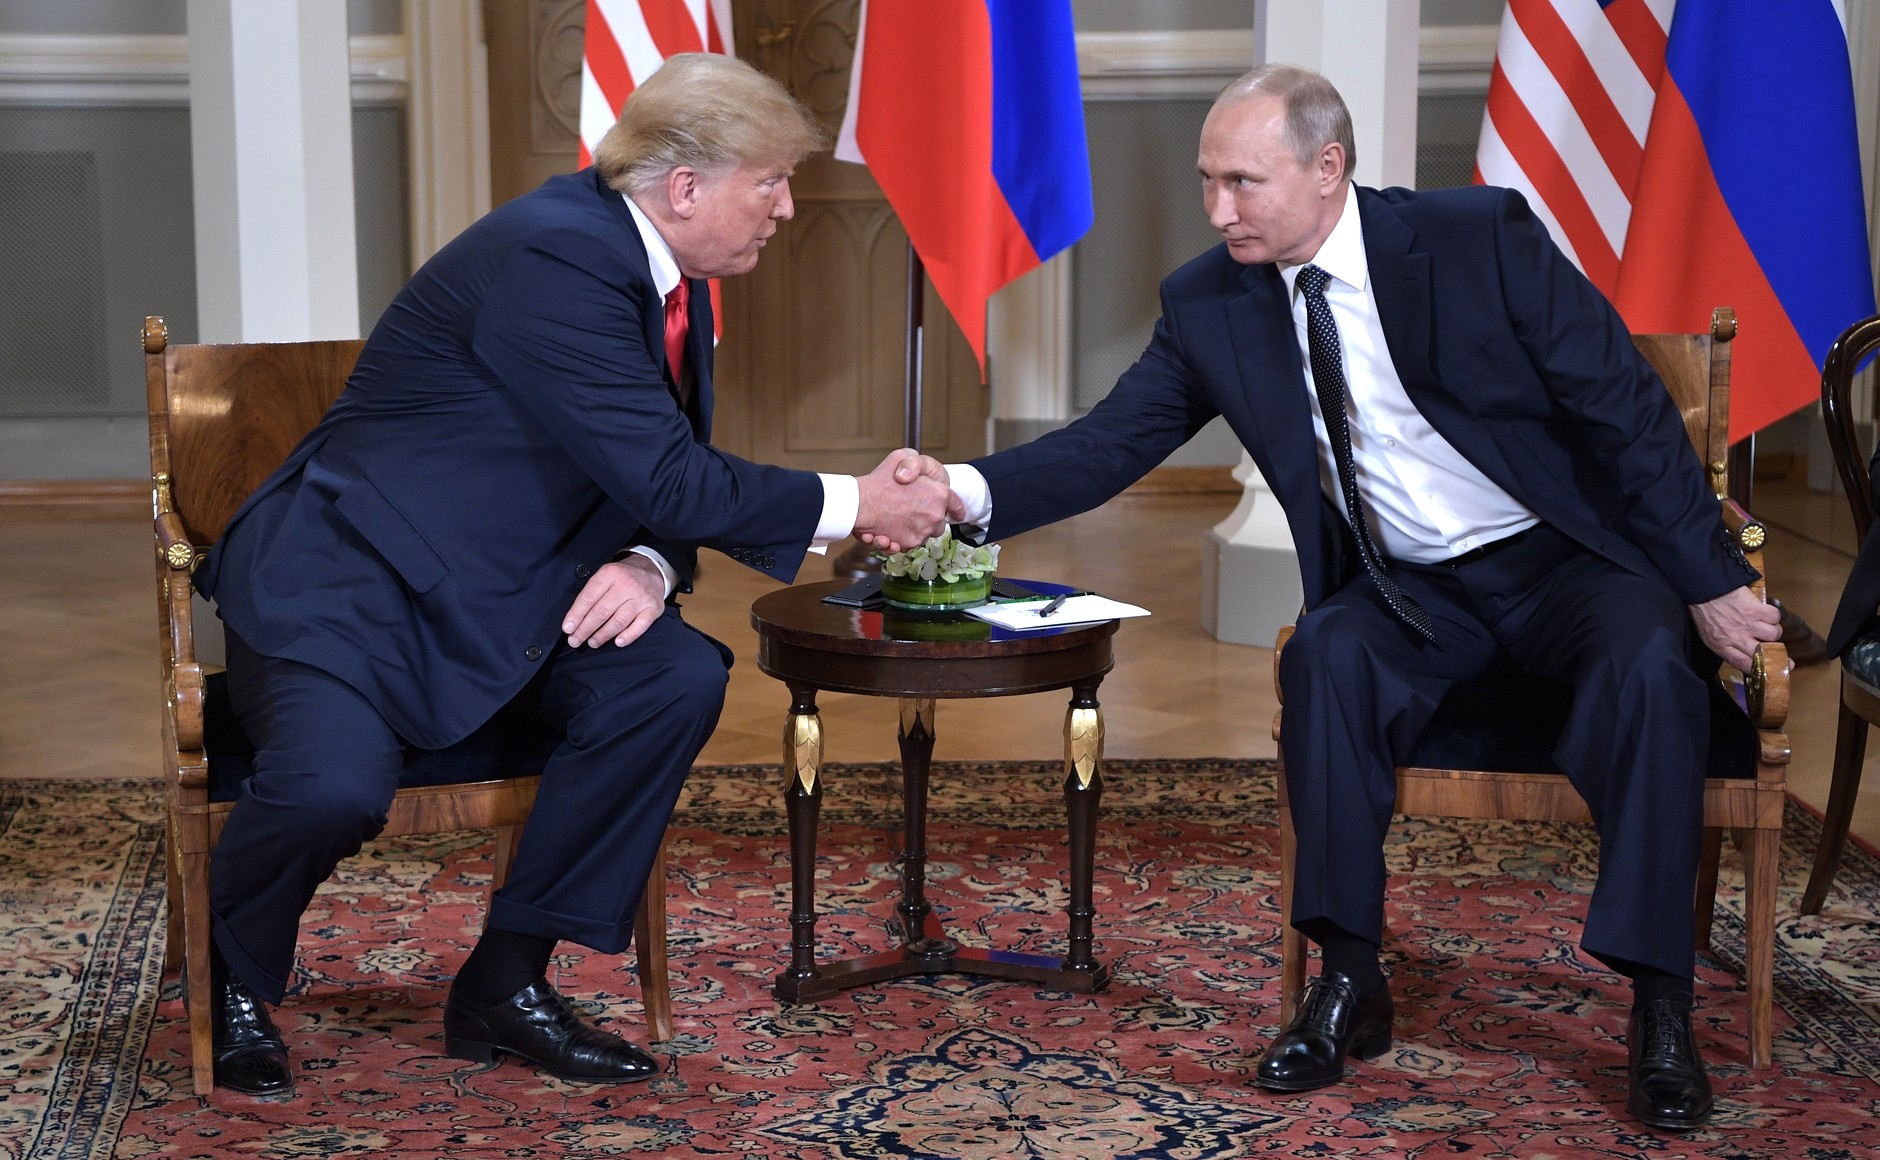 https://boingboing.net/wp-content/uploads/2020/08/Vladimir_Putin__Donald_Trump_in_Helsinki_16_July_2018_3.jpg